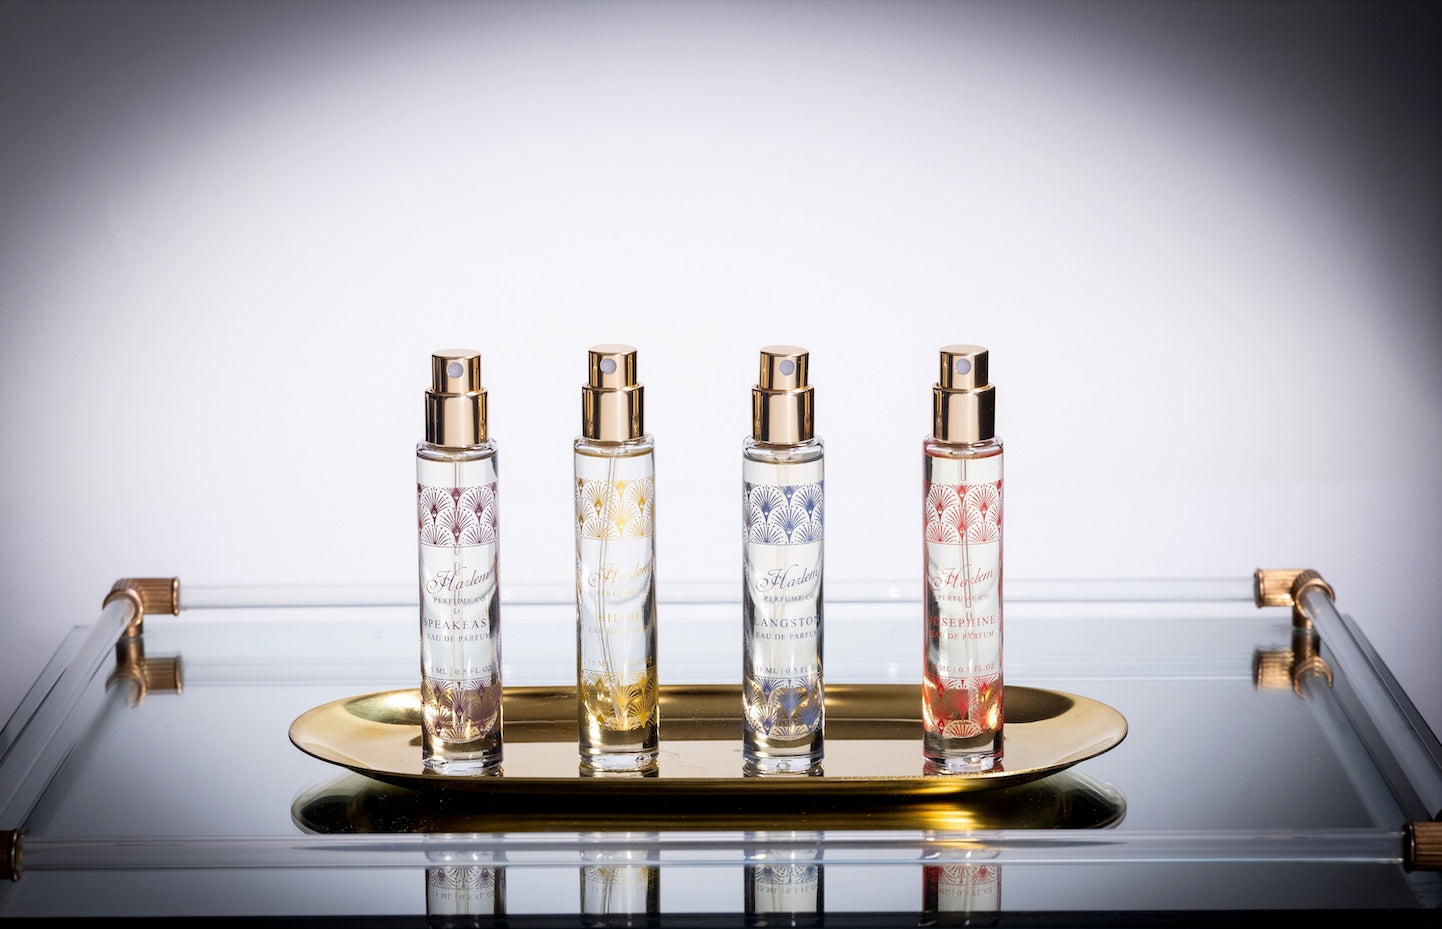 A lifestyle image of the Speakeasy, Billie, Langston and Josephine eau de parfum in 15ml